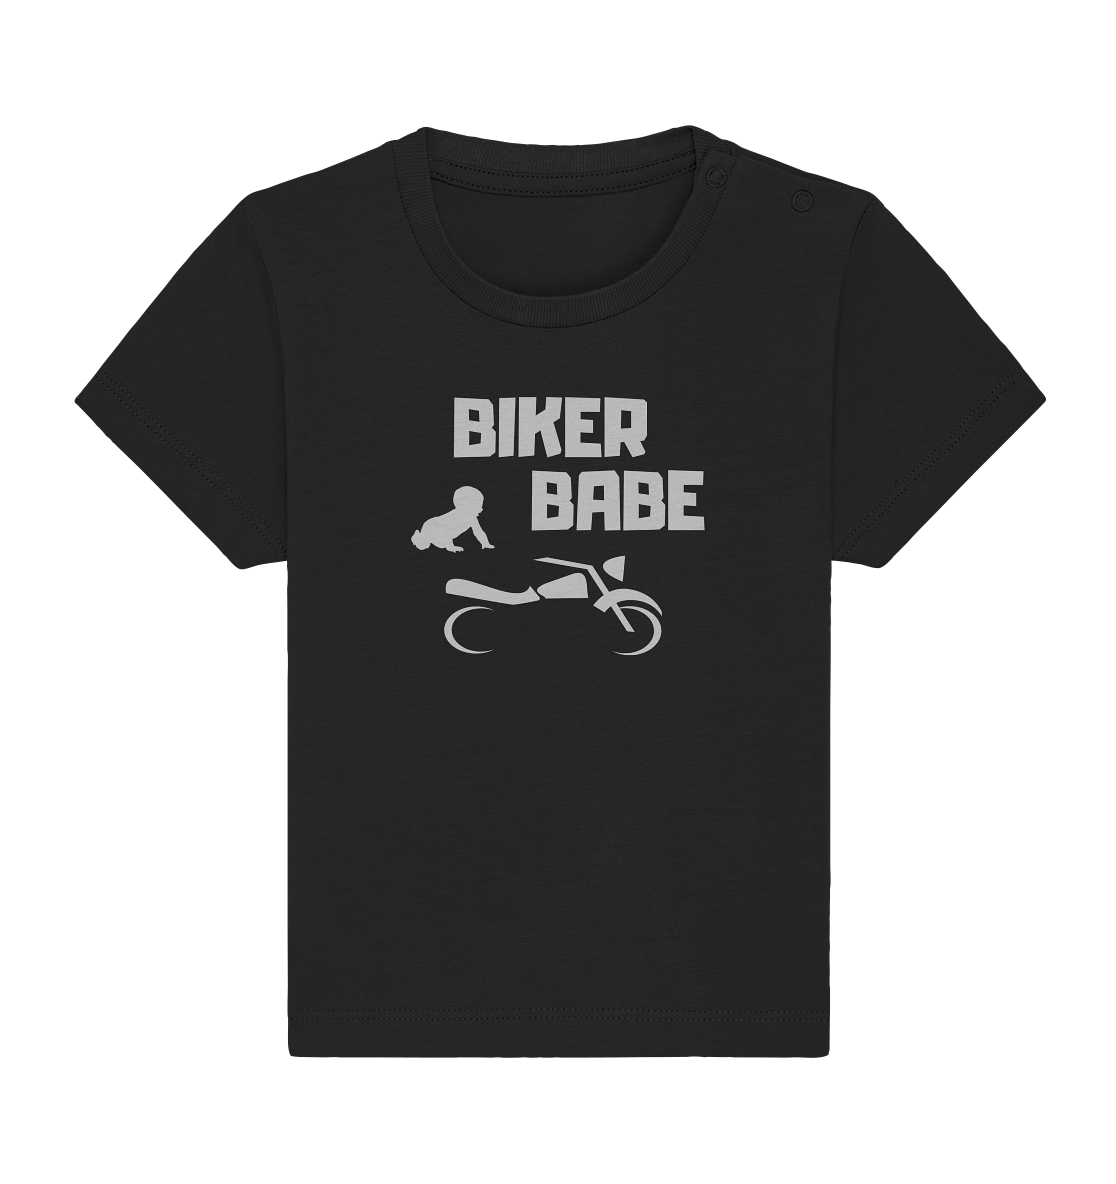 T-Shirt, Kinder, Kids, Motorrad, motorcycle, motorbike, Baby-Shirt, bedruckt, print "Biker Babe", Junge, boy, schwarz, black